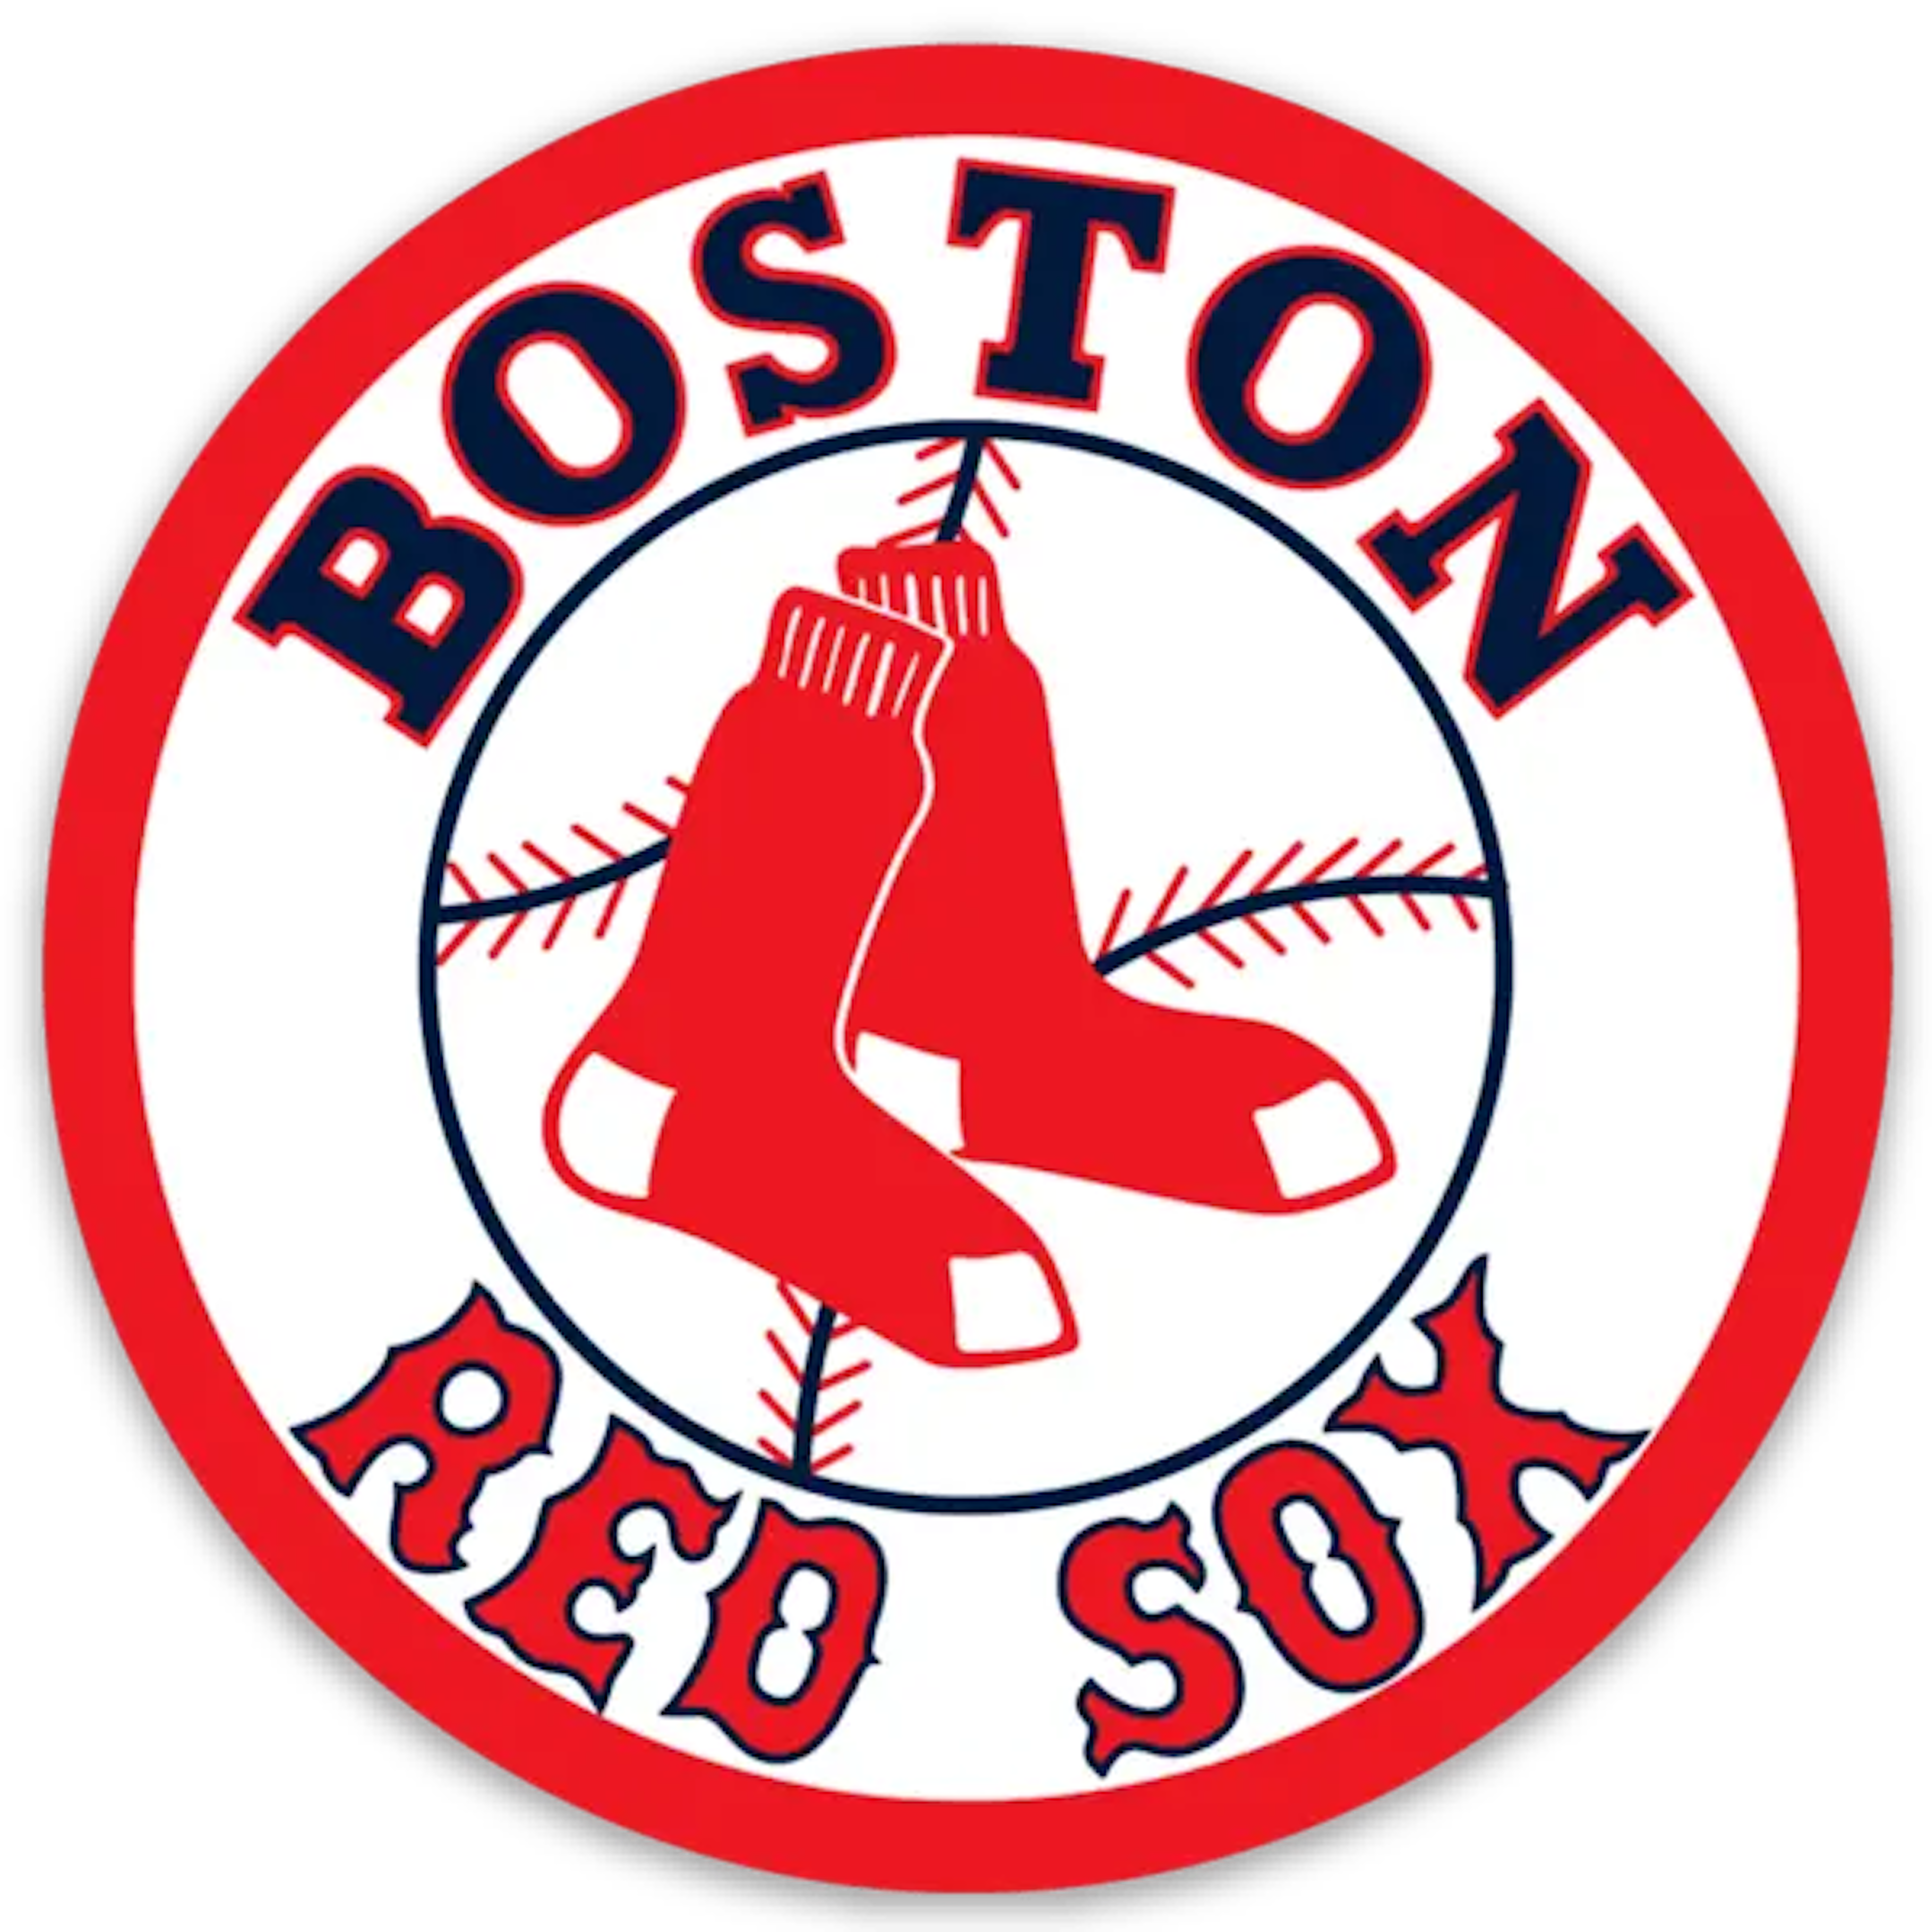 Redsox logo